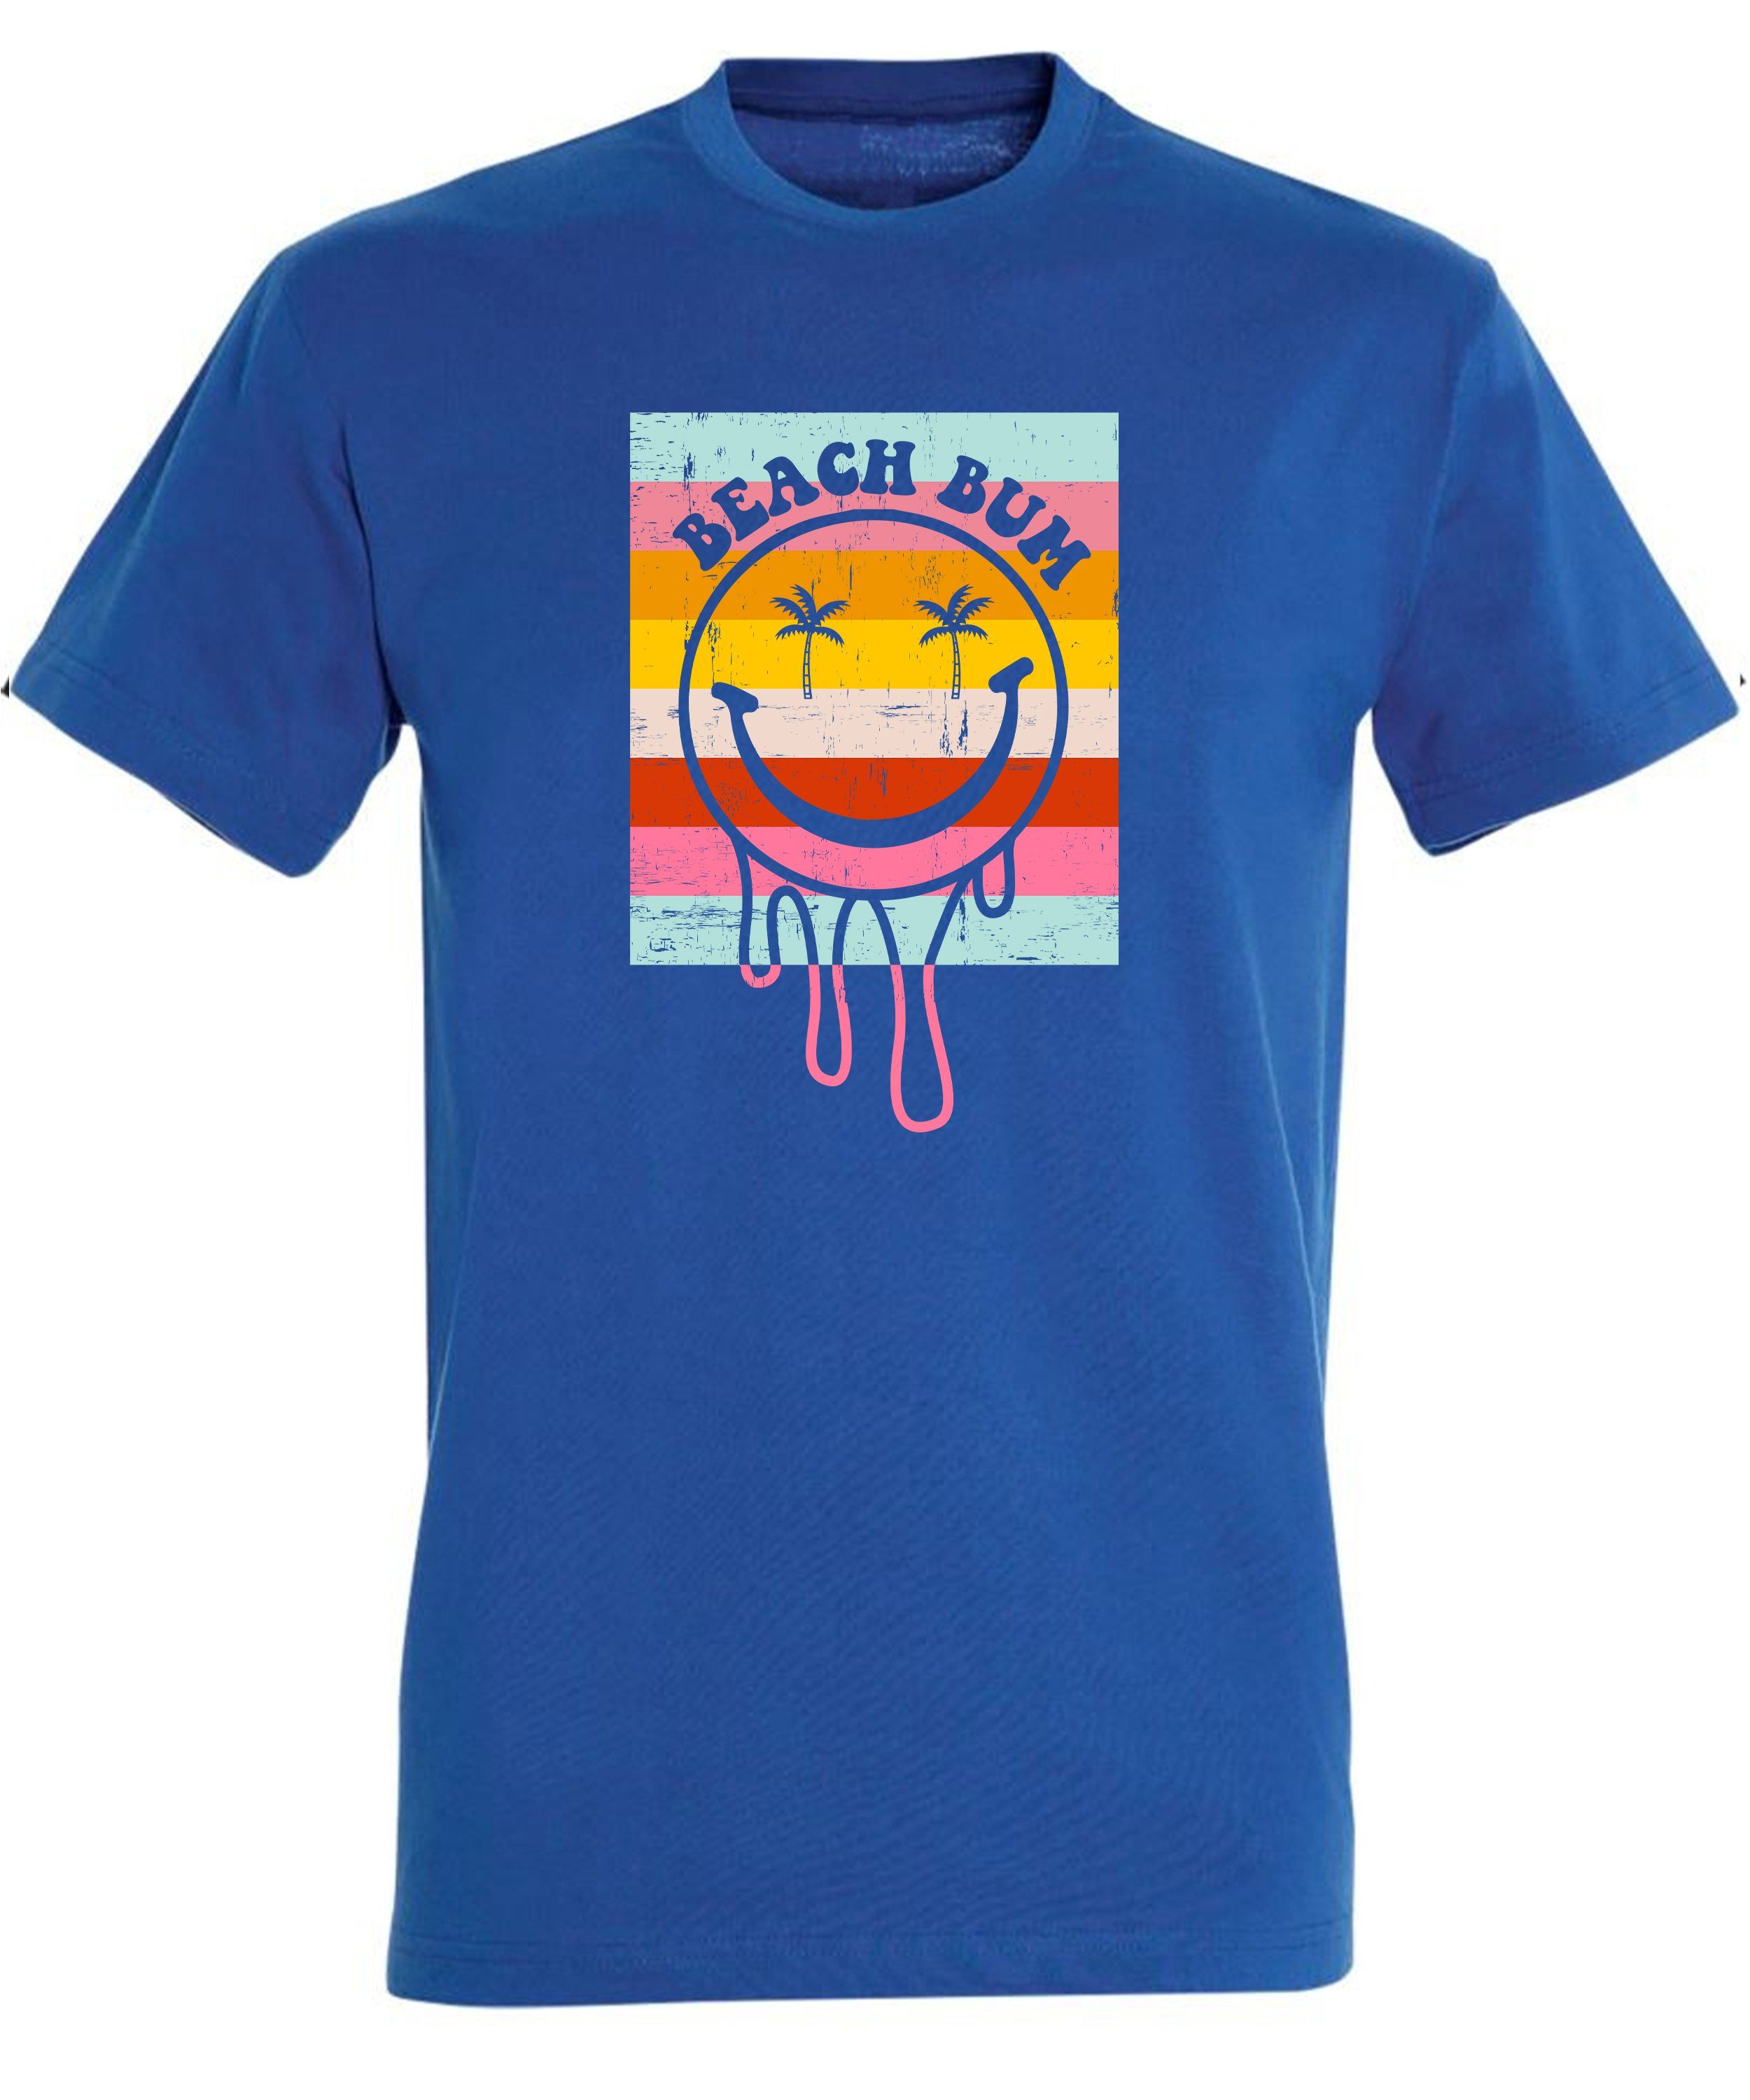 MyDesign24 T-Shirt Herren Smiley Fit, royal Print Aufdruck Smiley - Baumwollshirt Bunter blau mit Bum Shirt Beach Regular i291